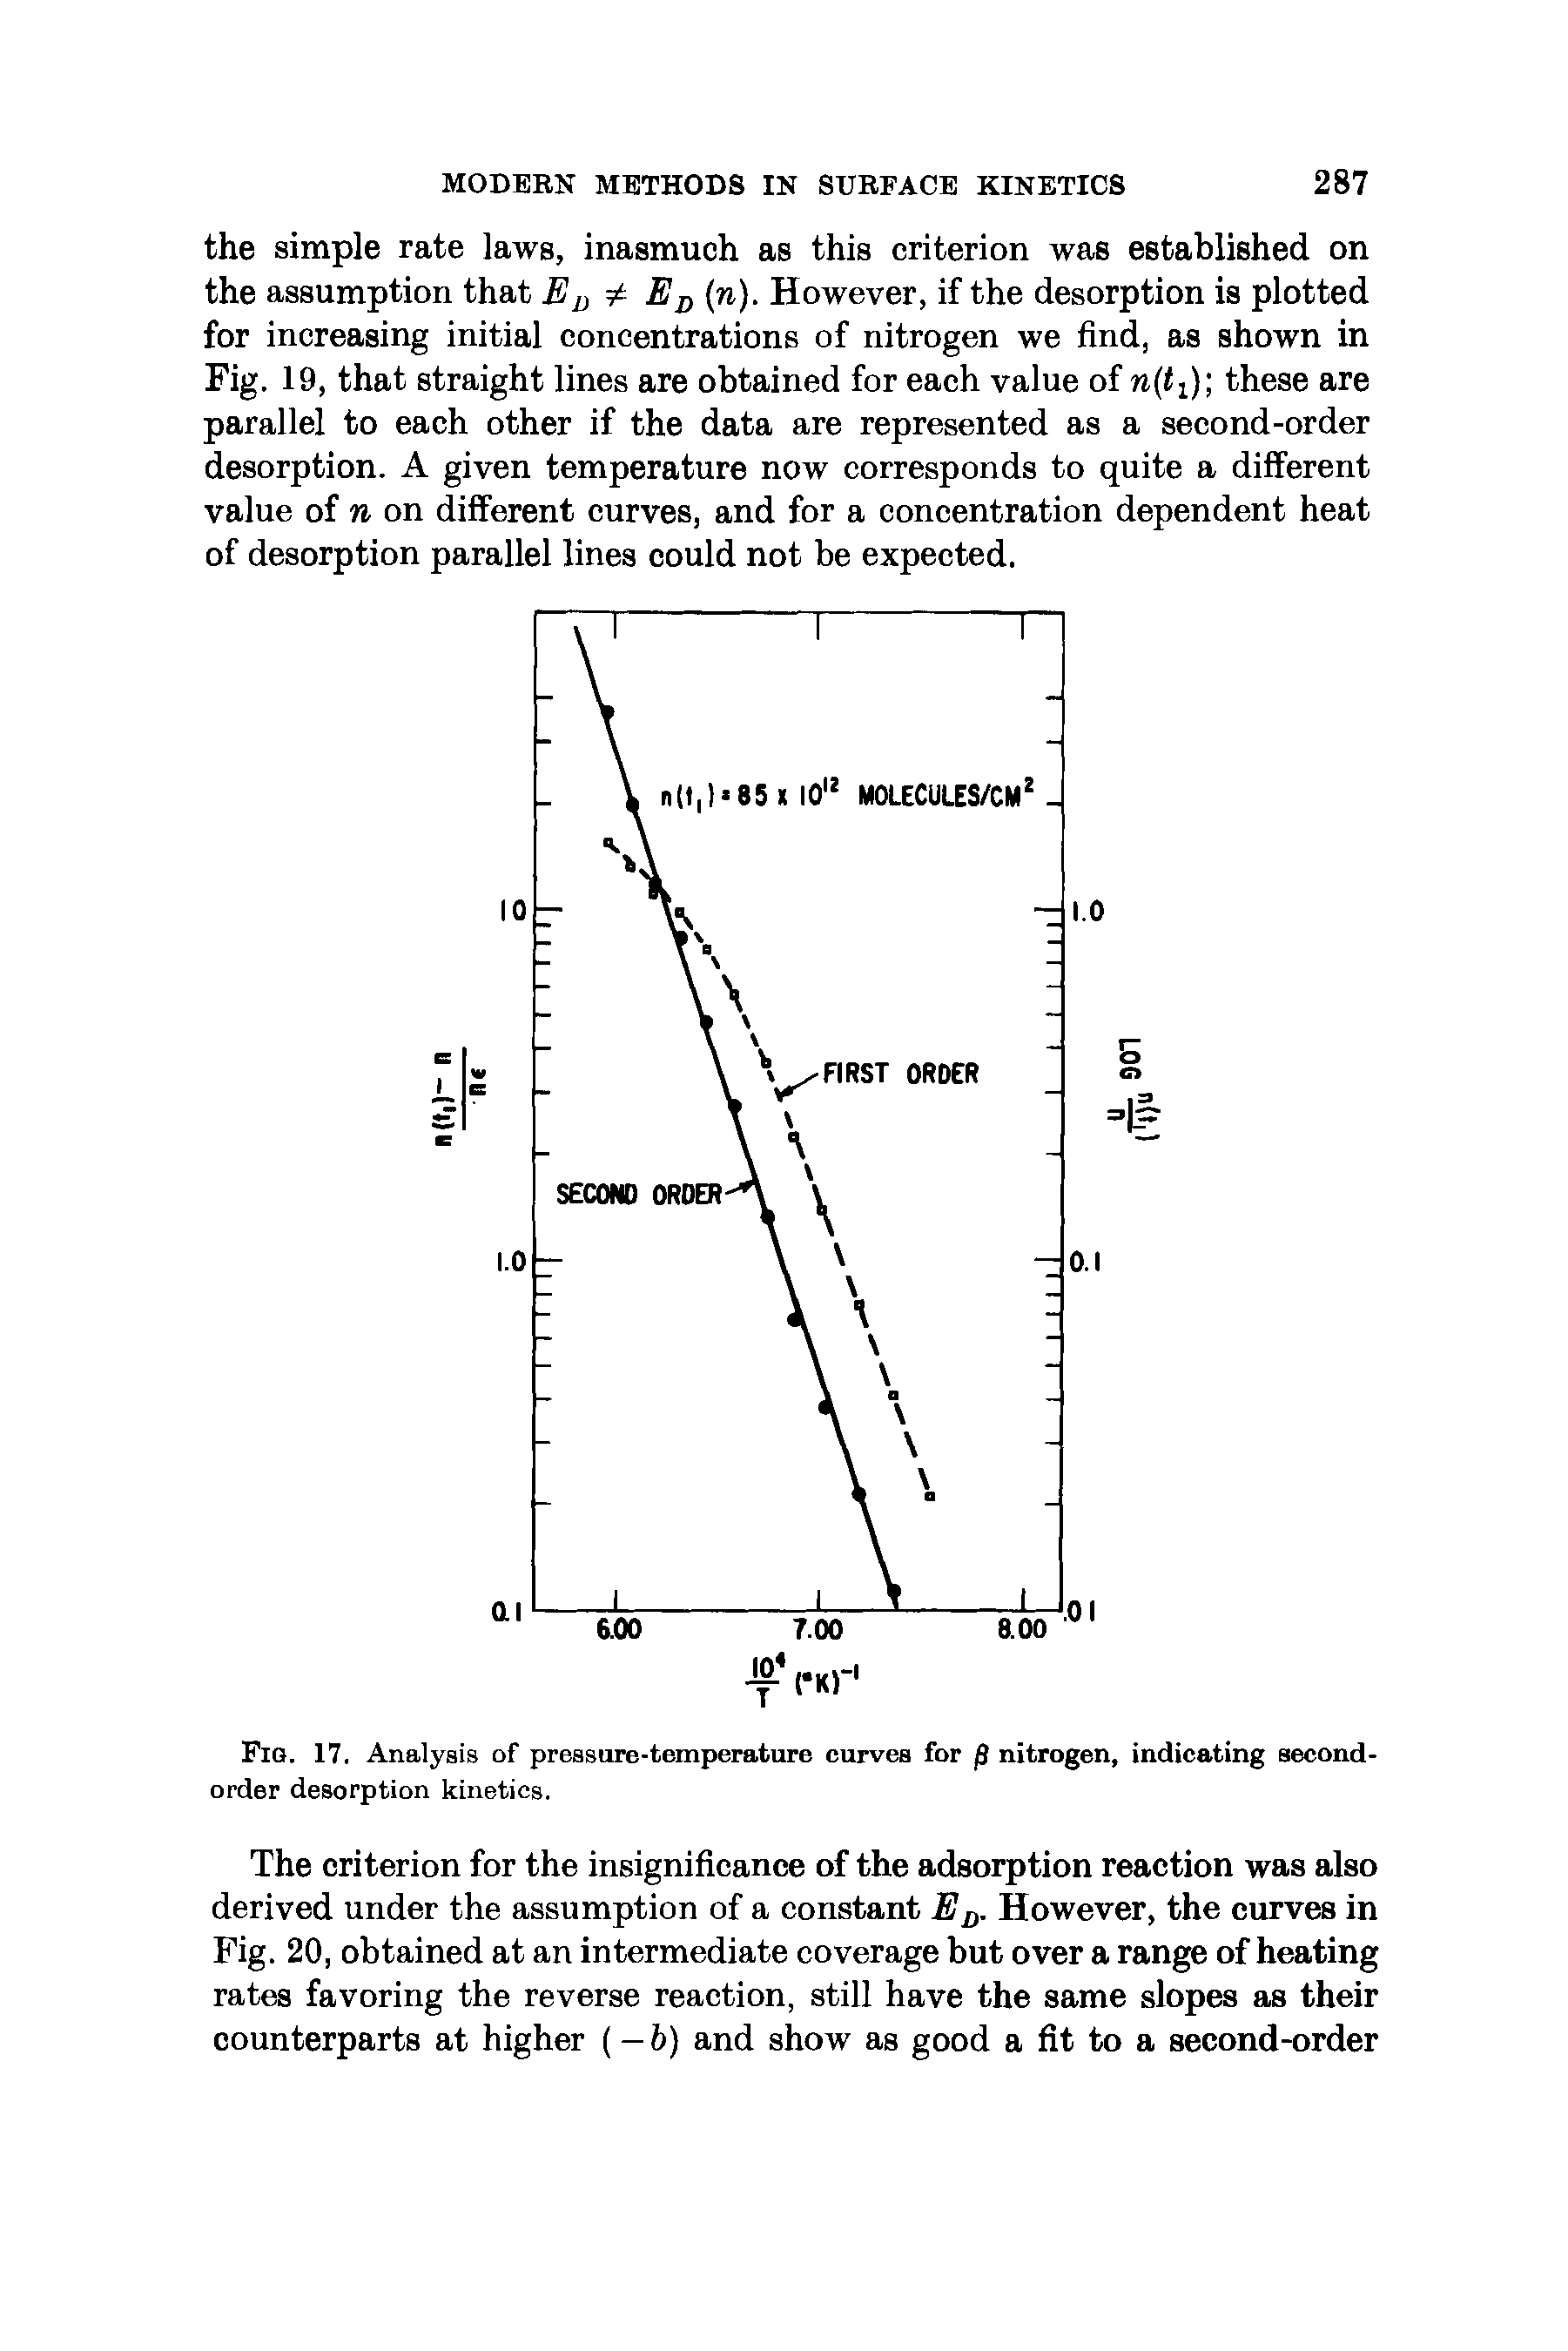 Fig. 17. Analysis of pressure-temperature curves for ft nitrogen, indicating second-order desorption kinetics.